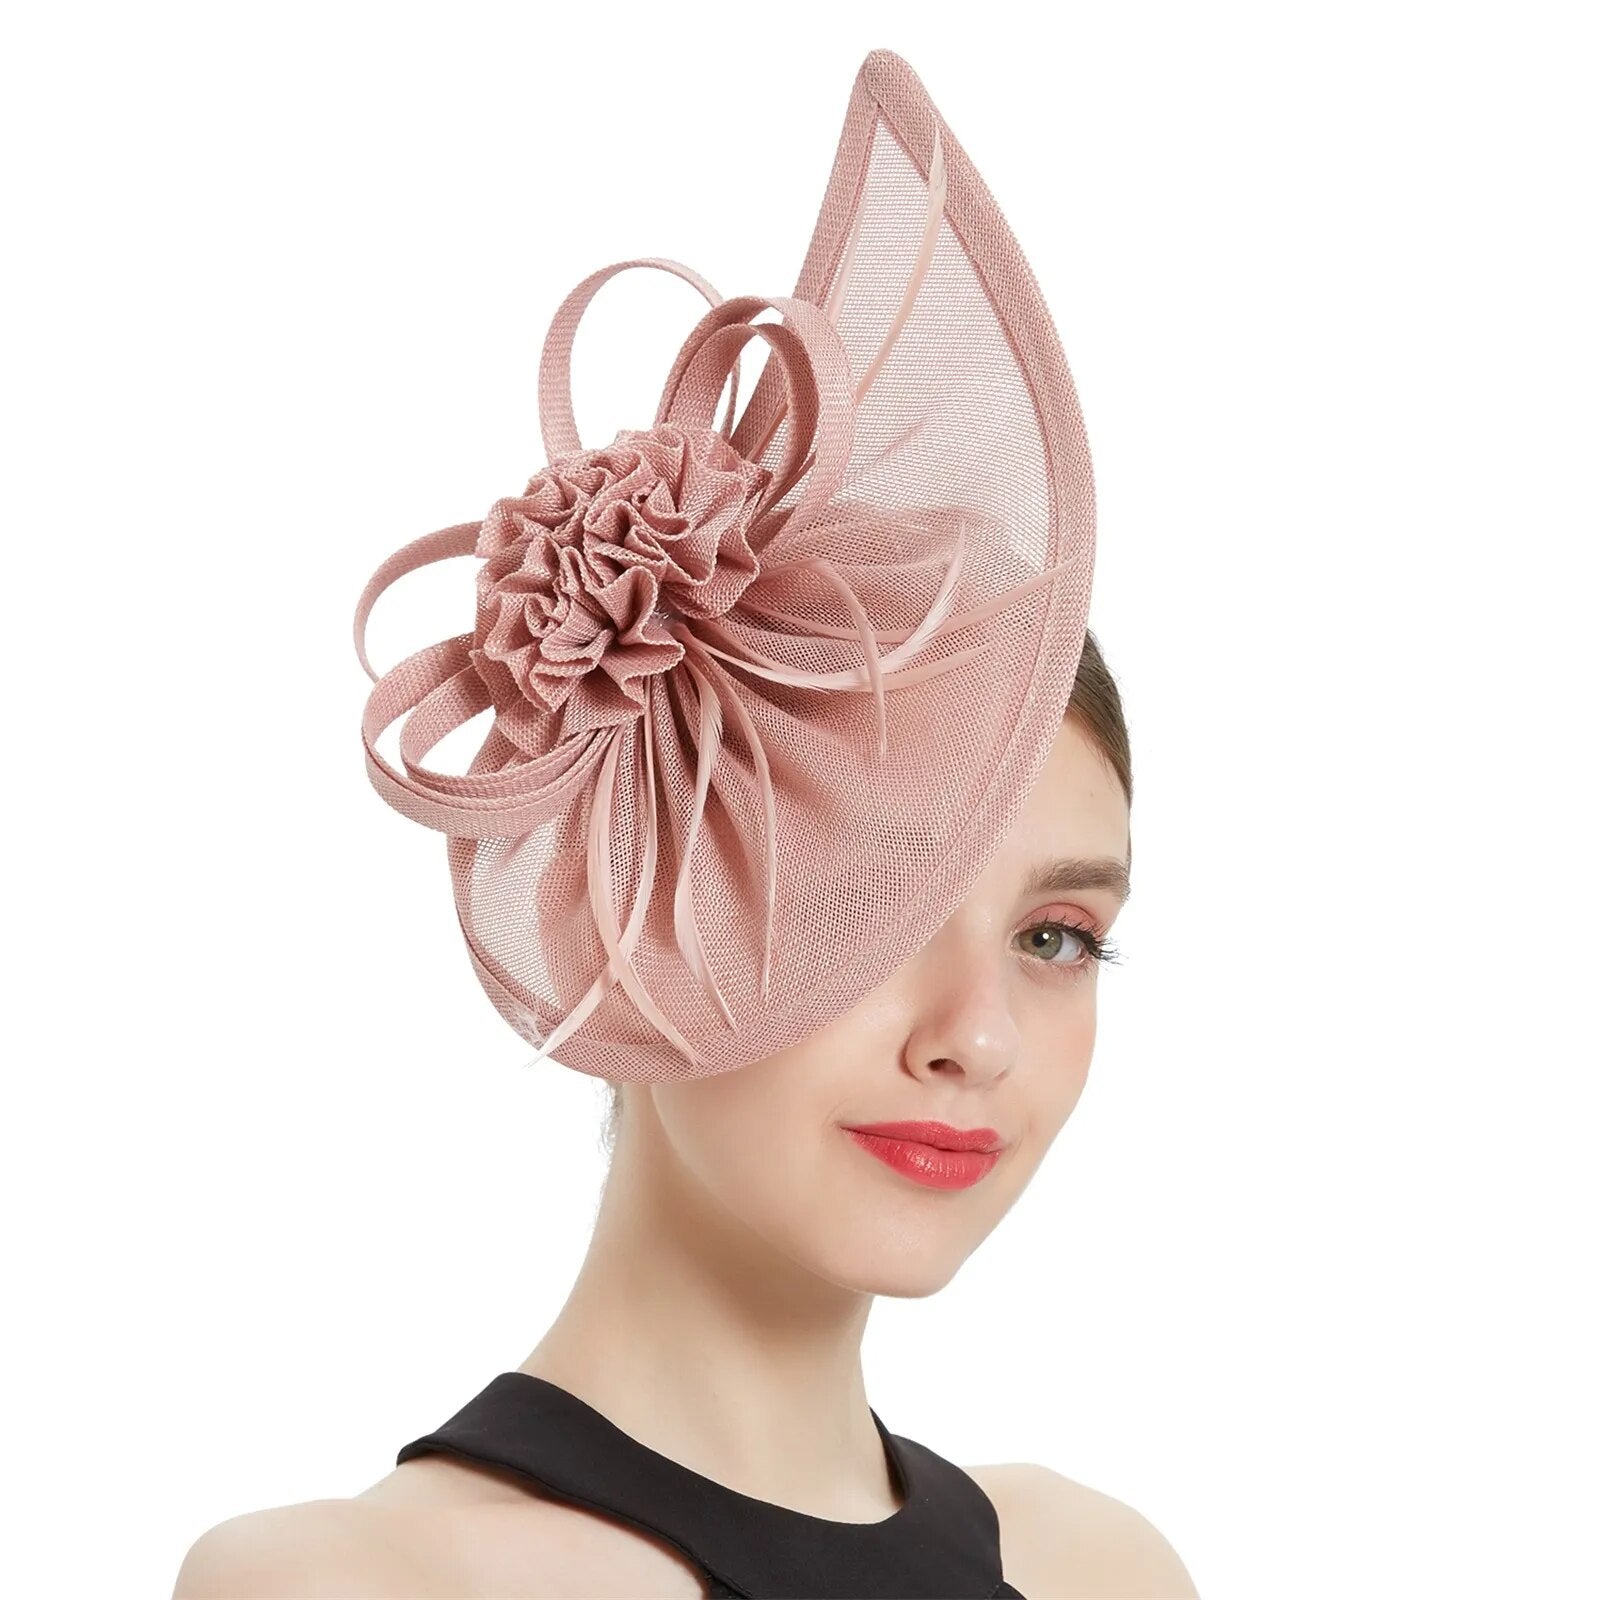 Londonisy Women Fascinator Headwear Wedding Party Hair Accessories-fascinator-Pink-All10dollars.com